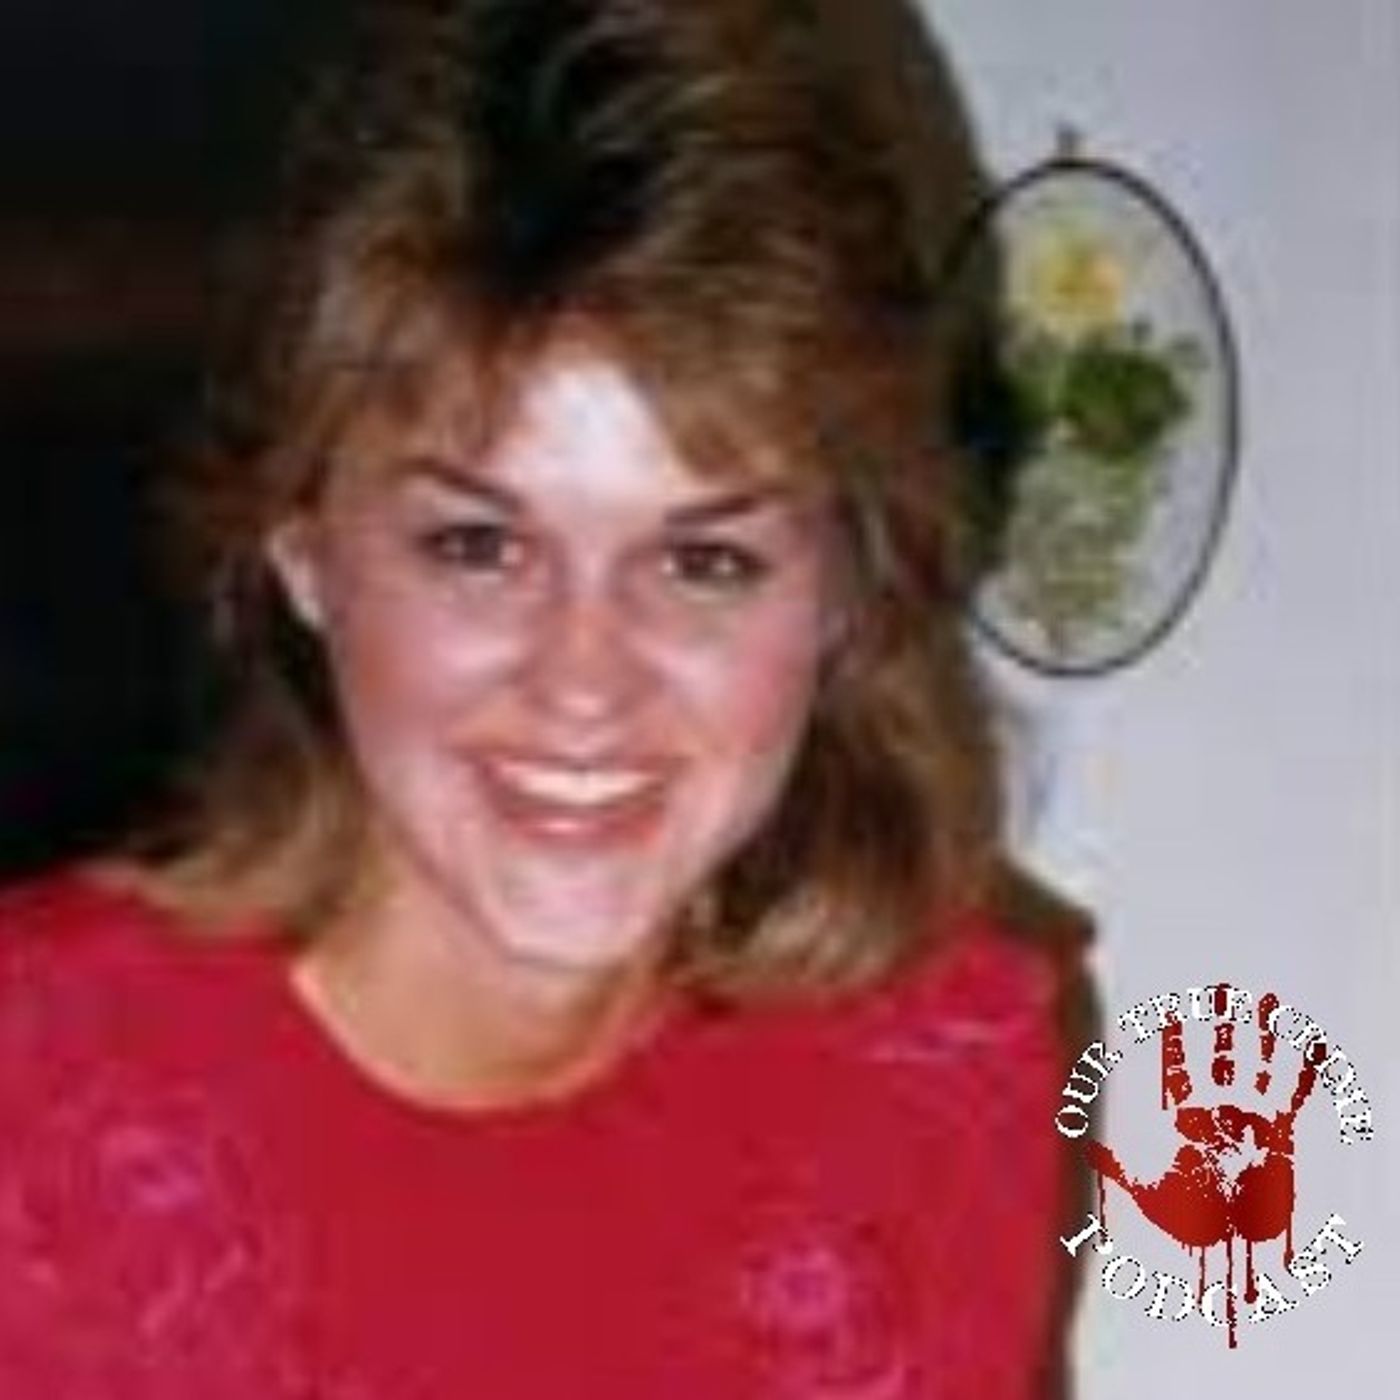 239. From Cop to Killer: The Murder of Sherri Rasmussen